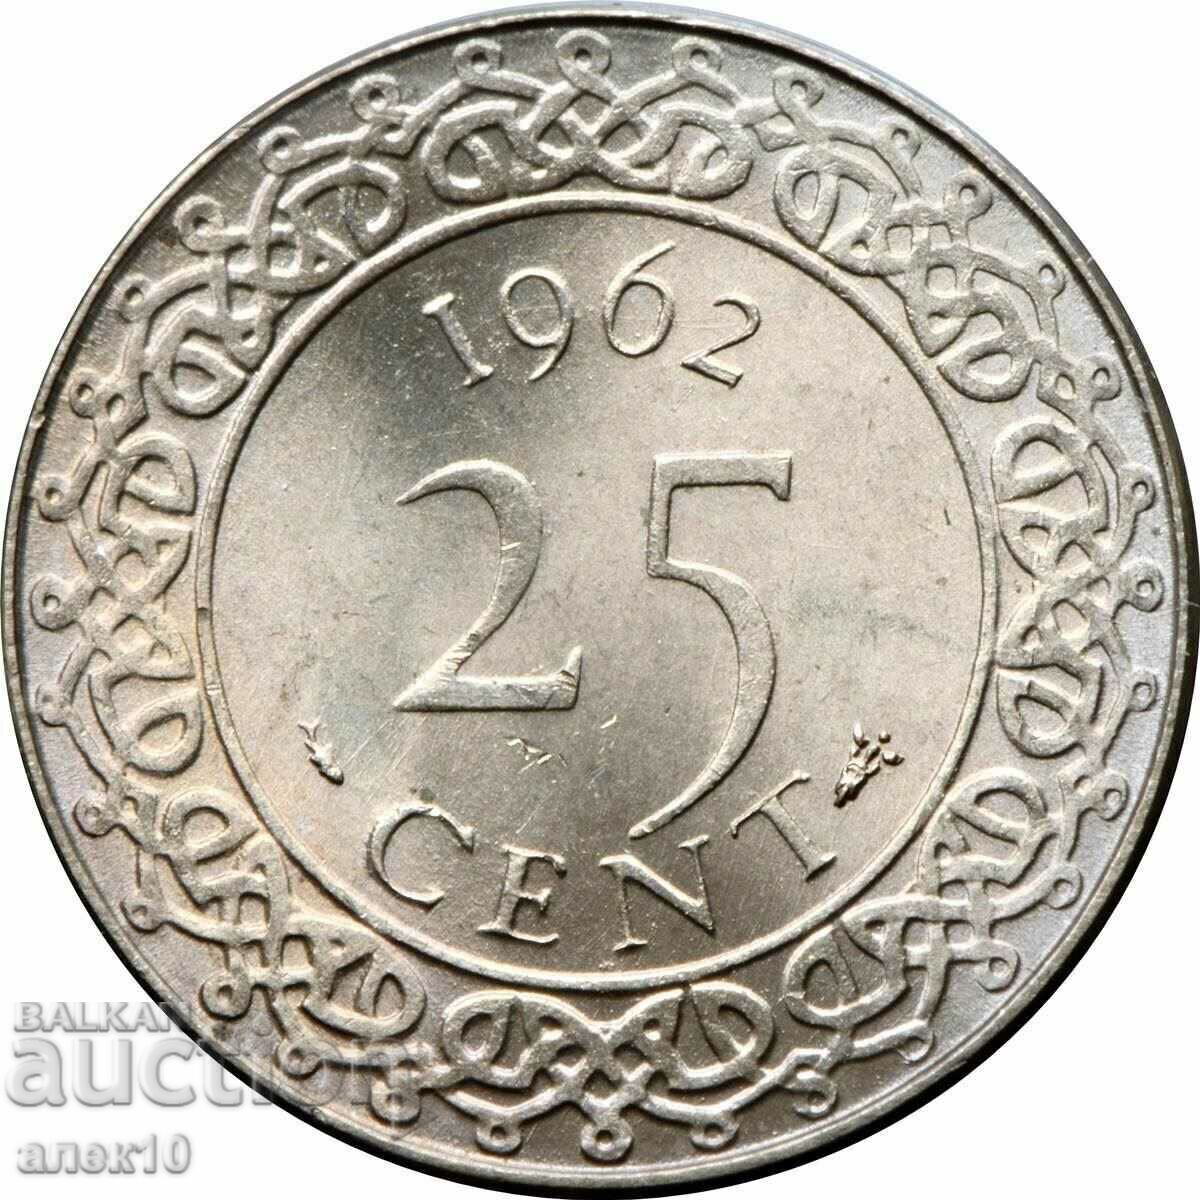 Suriname 25 cents 1962